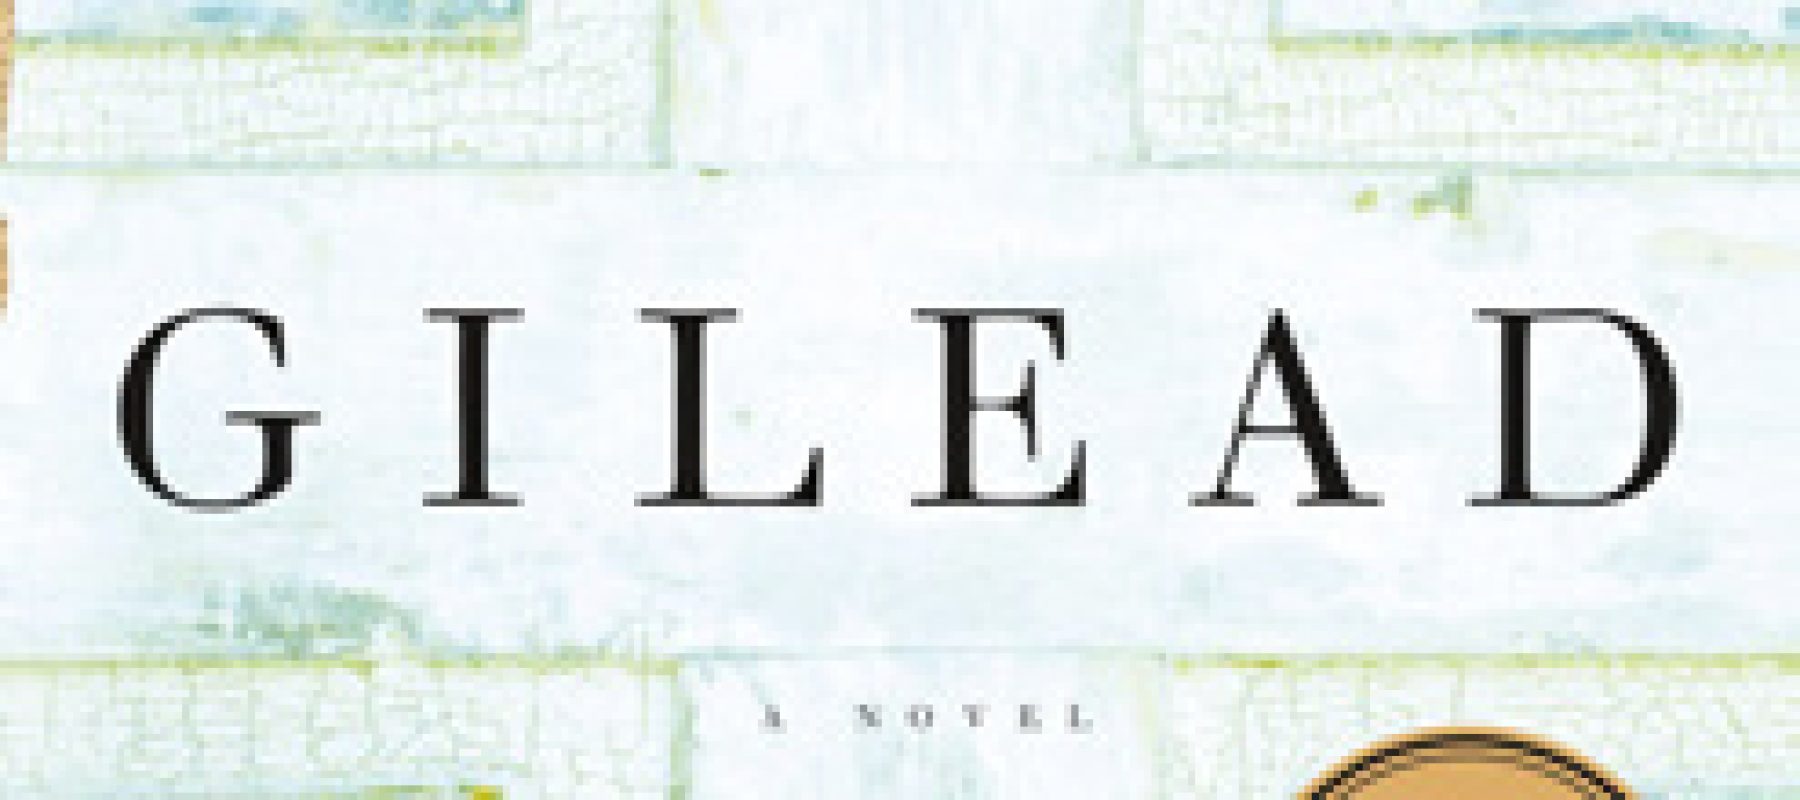 Book cover Gilead: A Novel